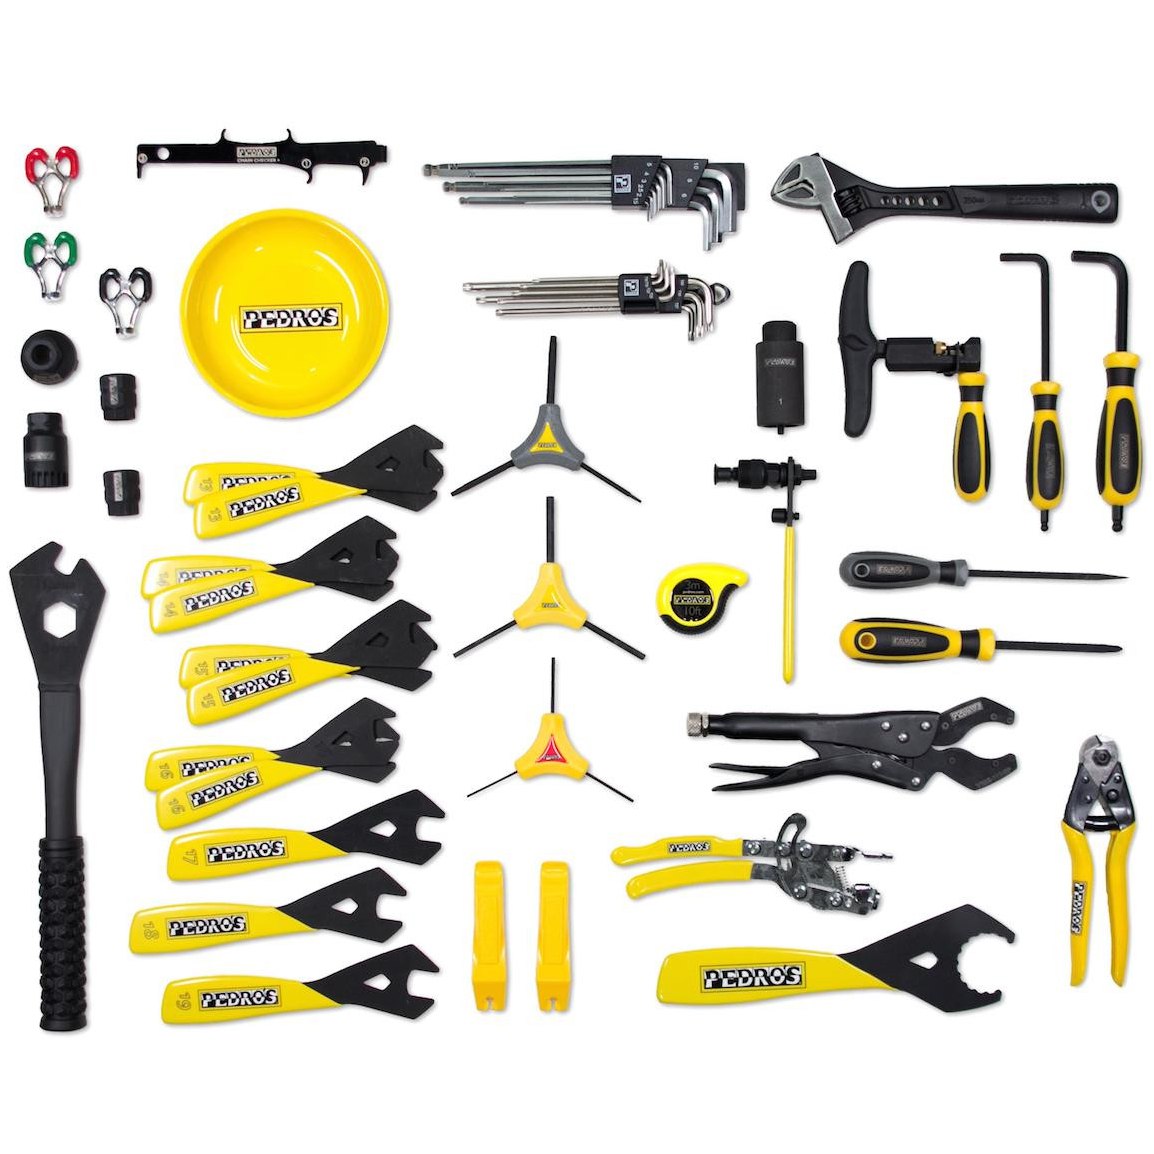 Productfoto van Pedro&#039;s Apprentice Bench Tool Kit